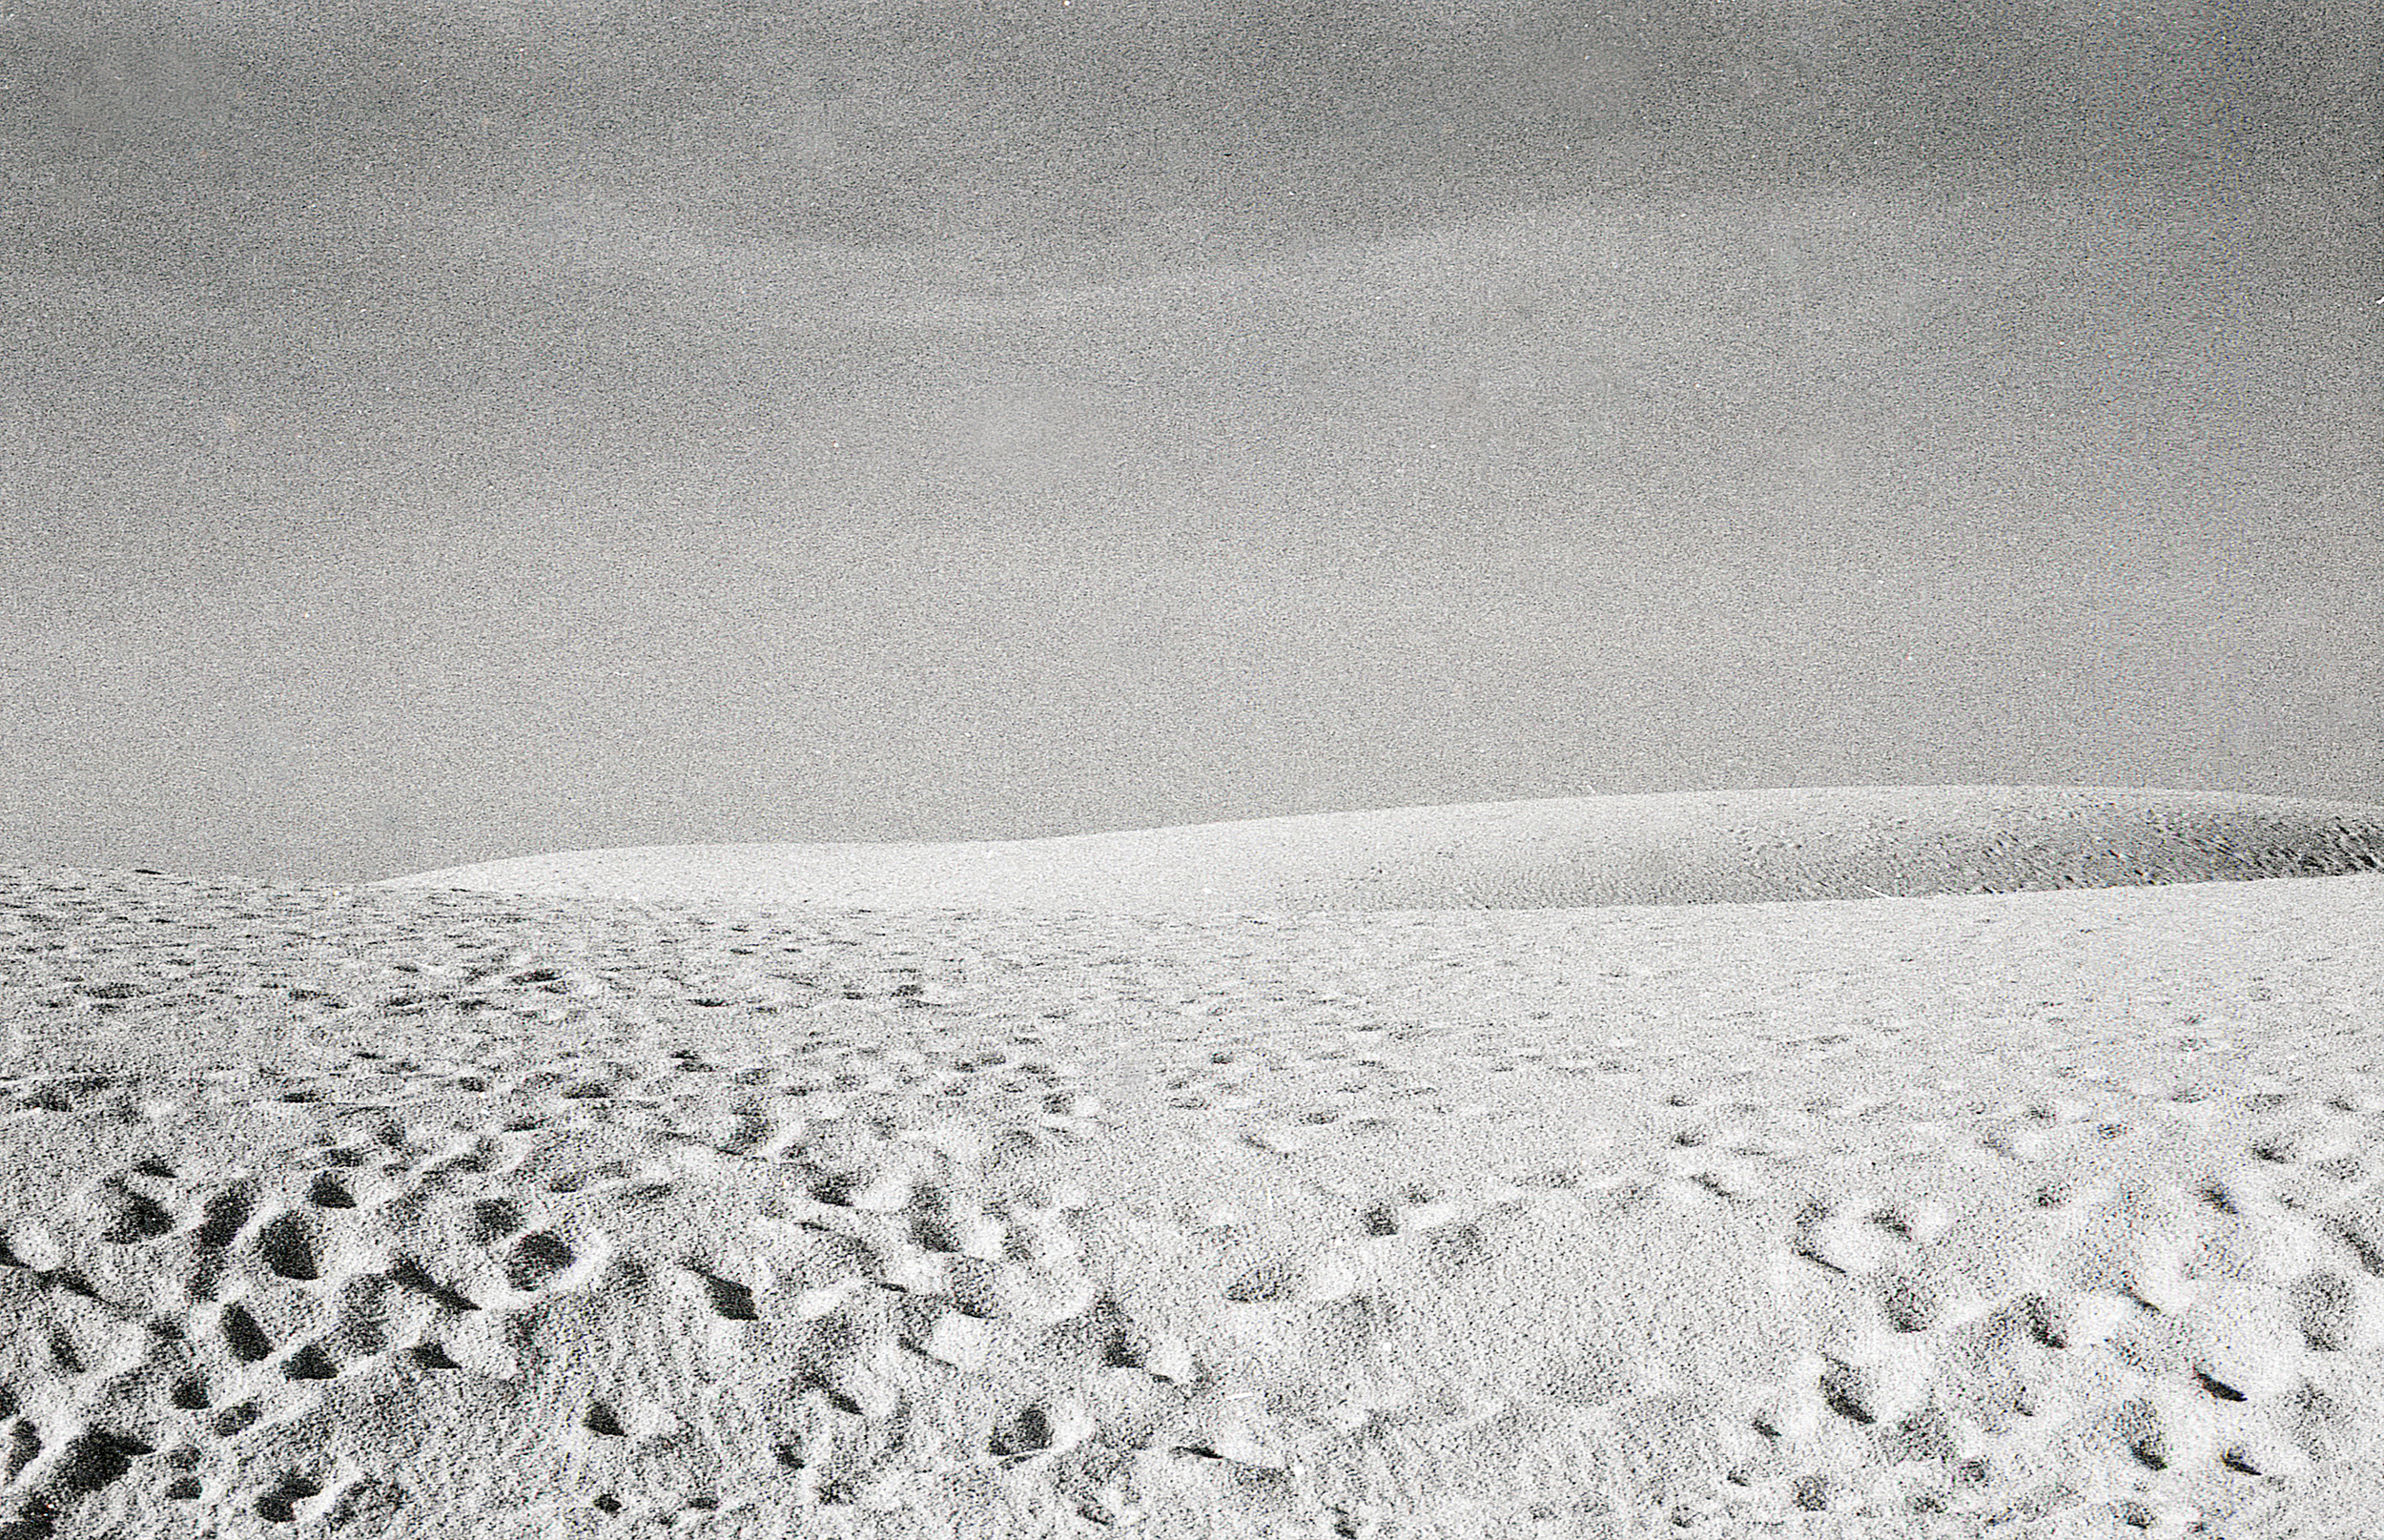  White Sands, NM 